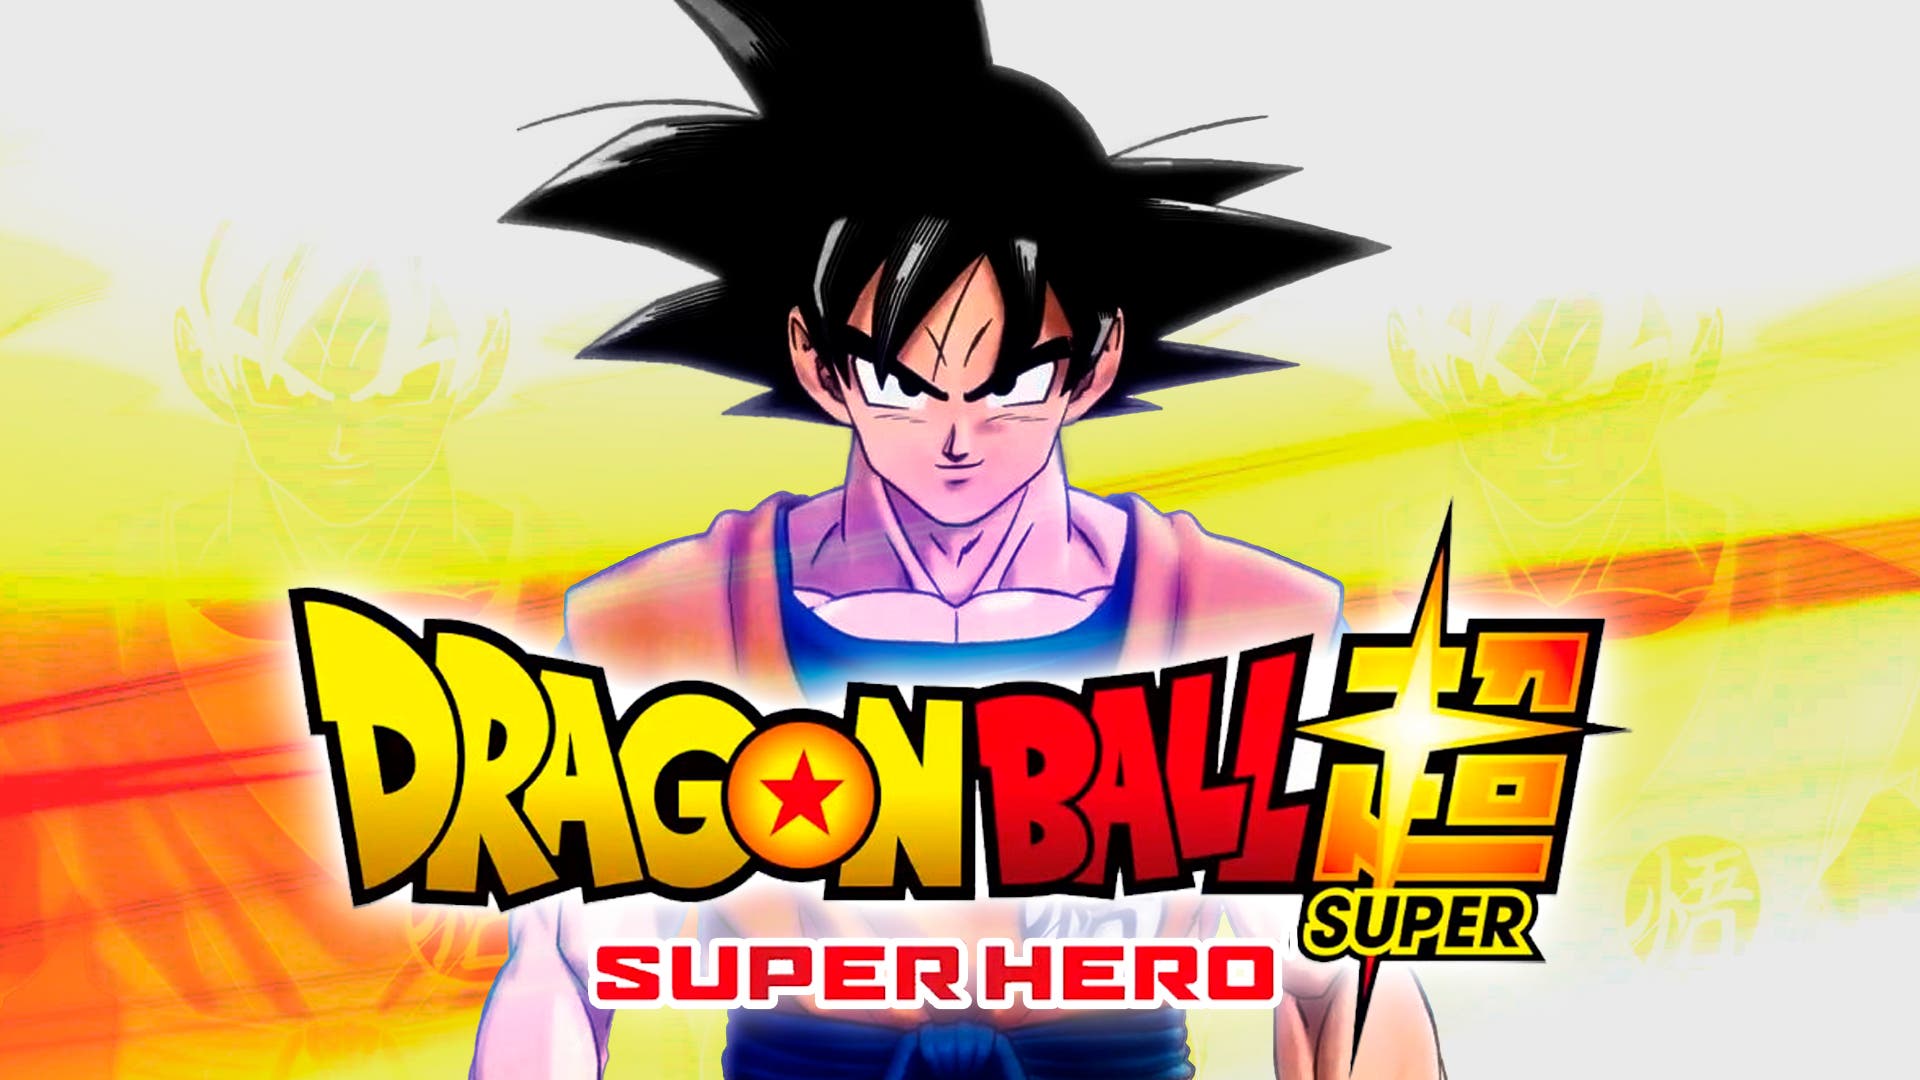 dragon ball super super hero full movie download reddit